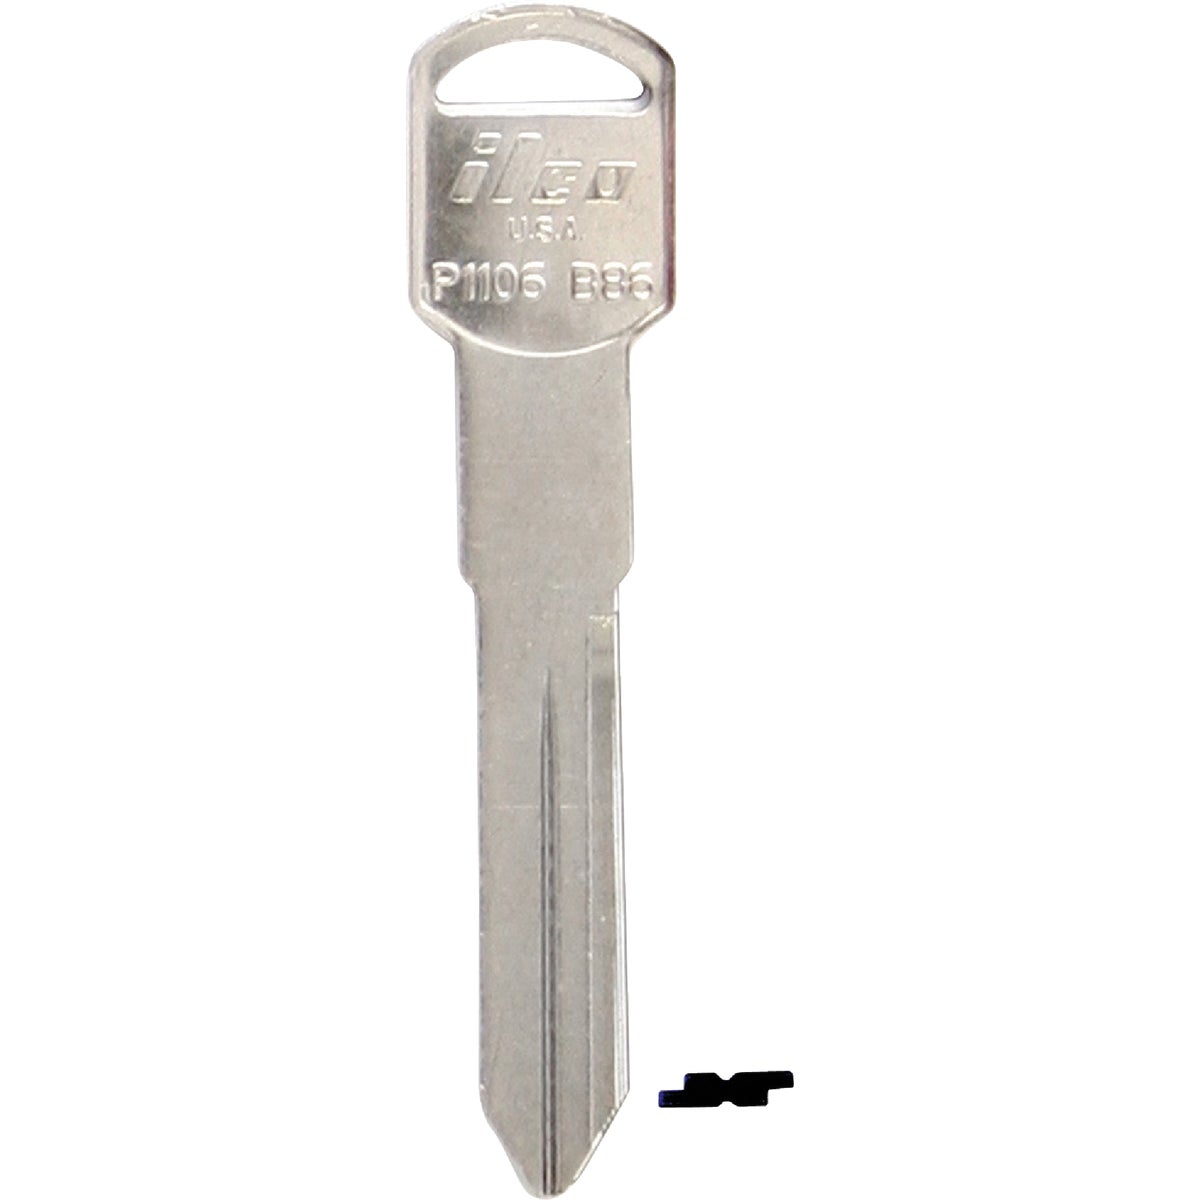 ILCO GM Nickel Plated Automotive Key, B86 / P1106 (10-Pack)